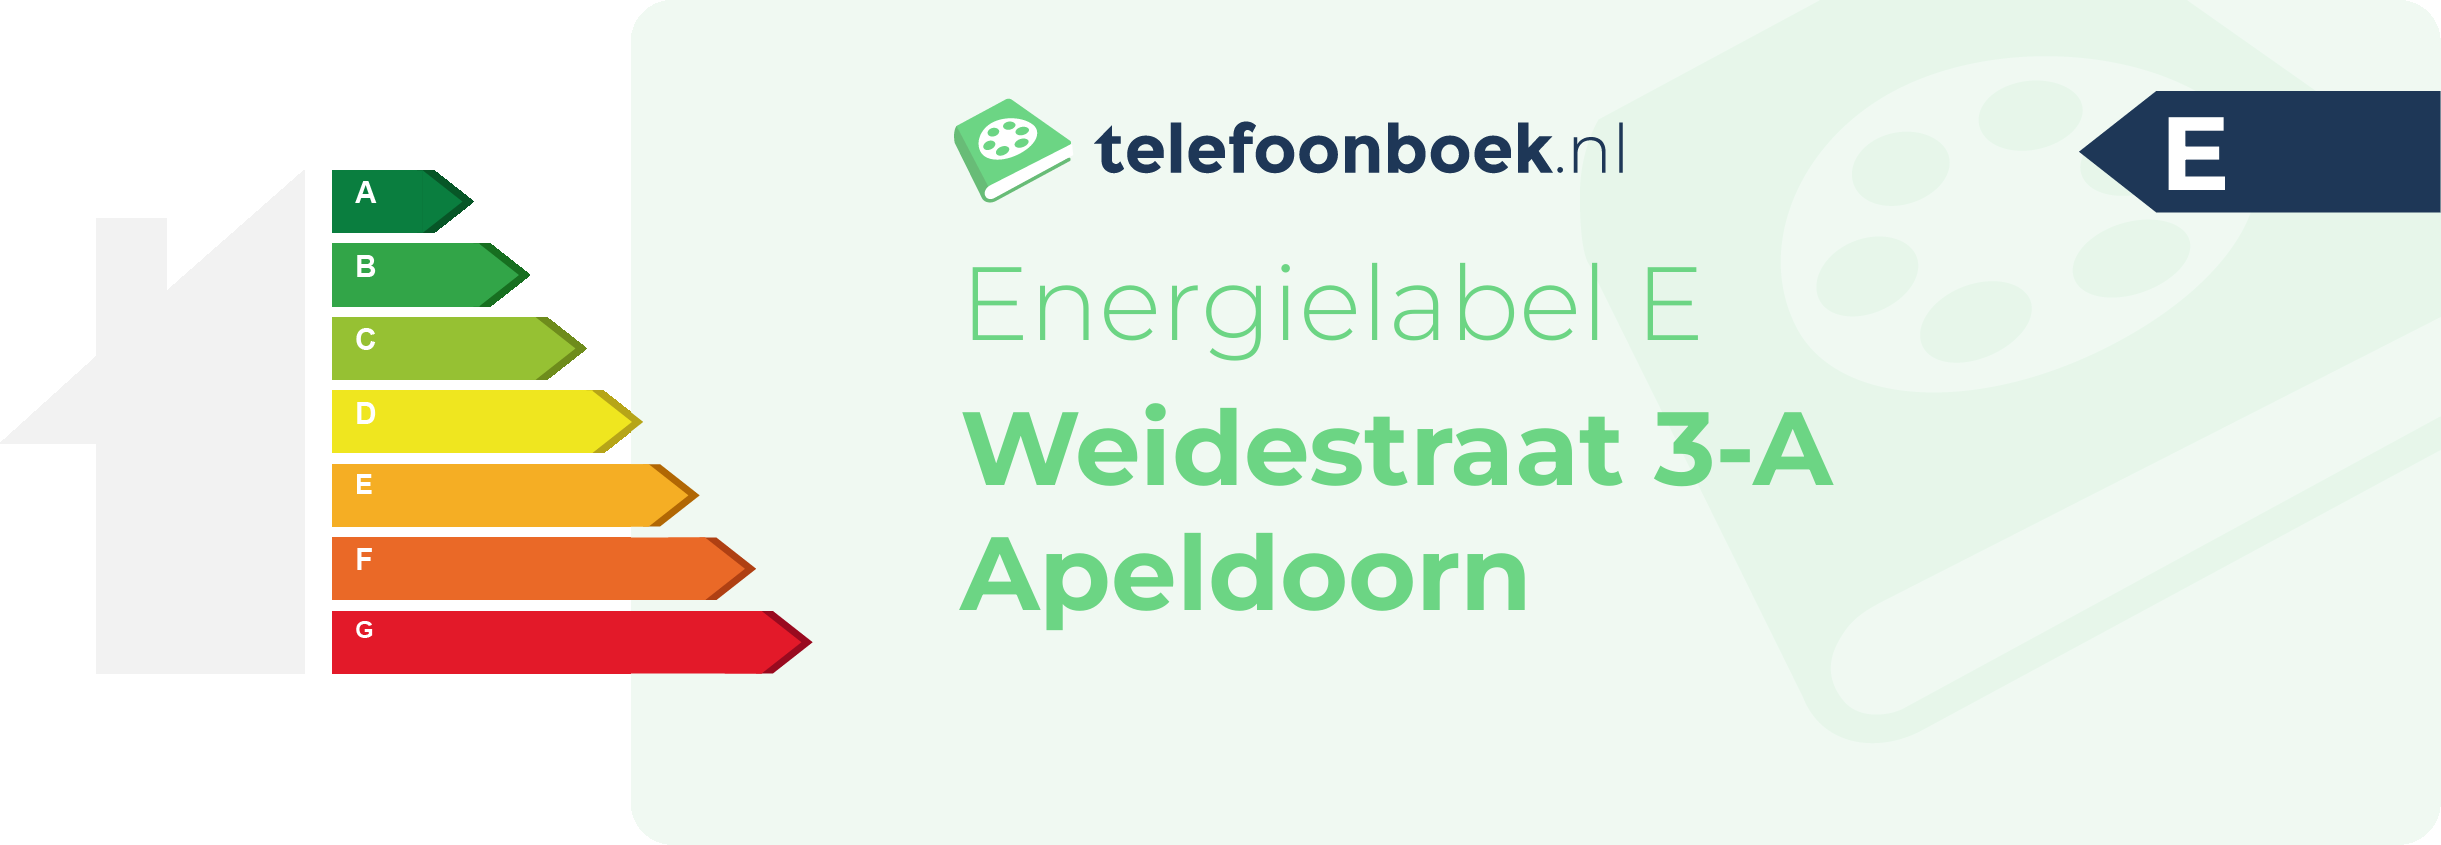 Energielabel Weidestraat 3-A Apeldoorn